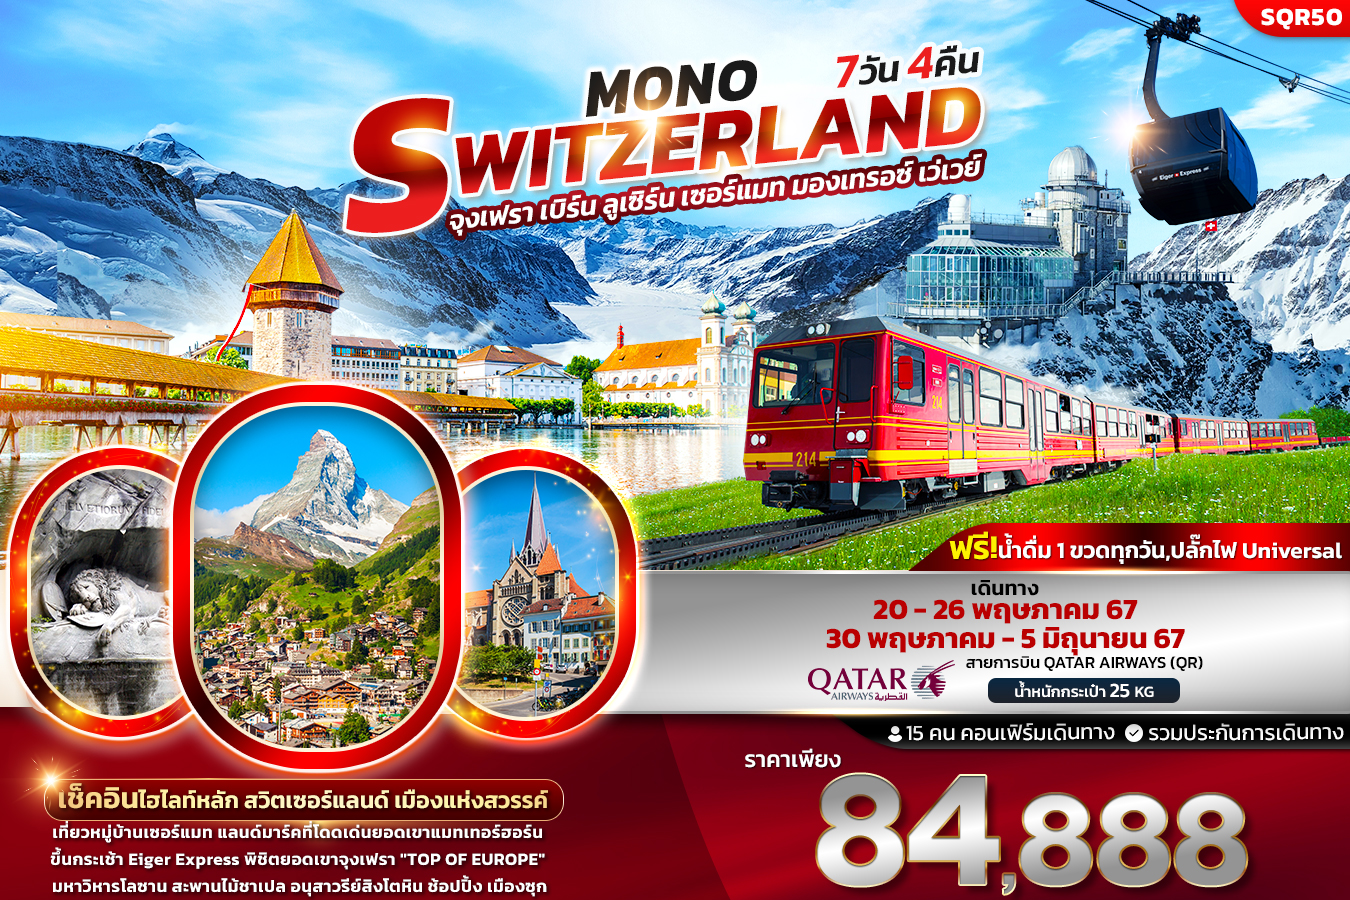  Mono Switzerland 7 วัน 4คืน